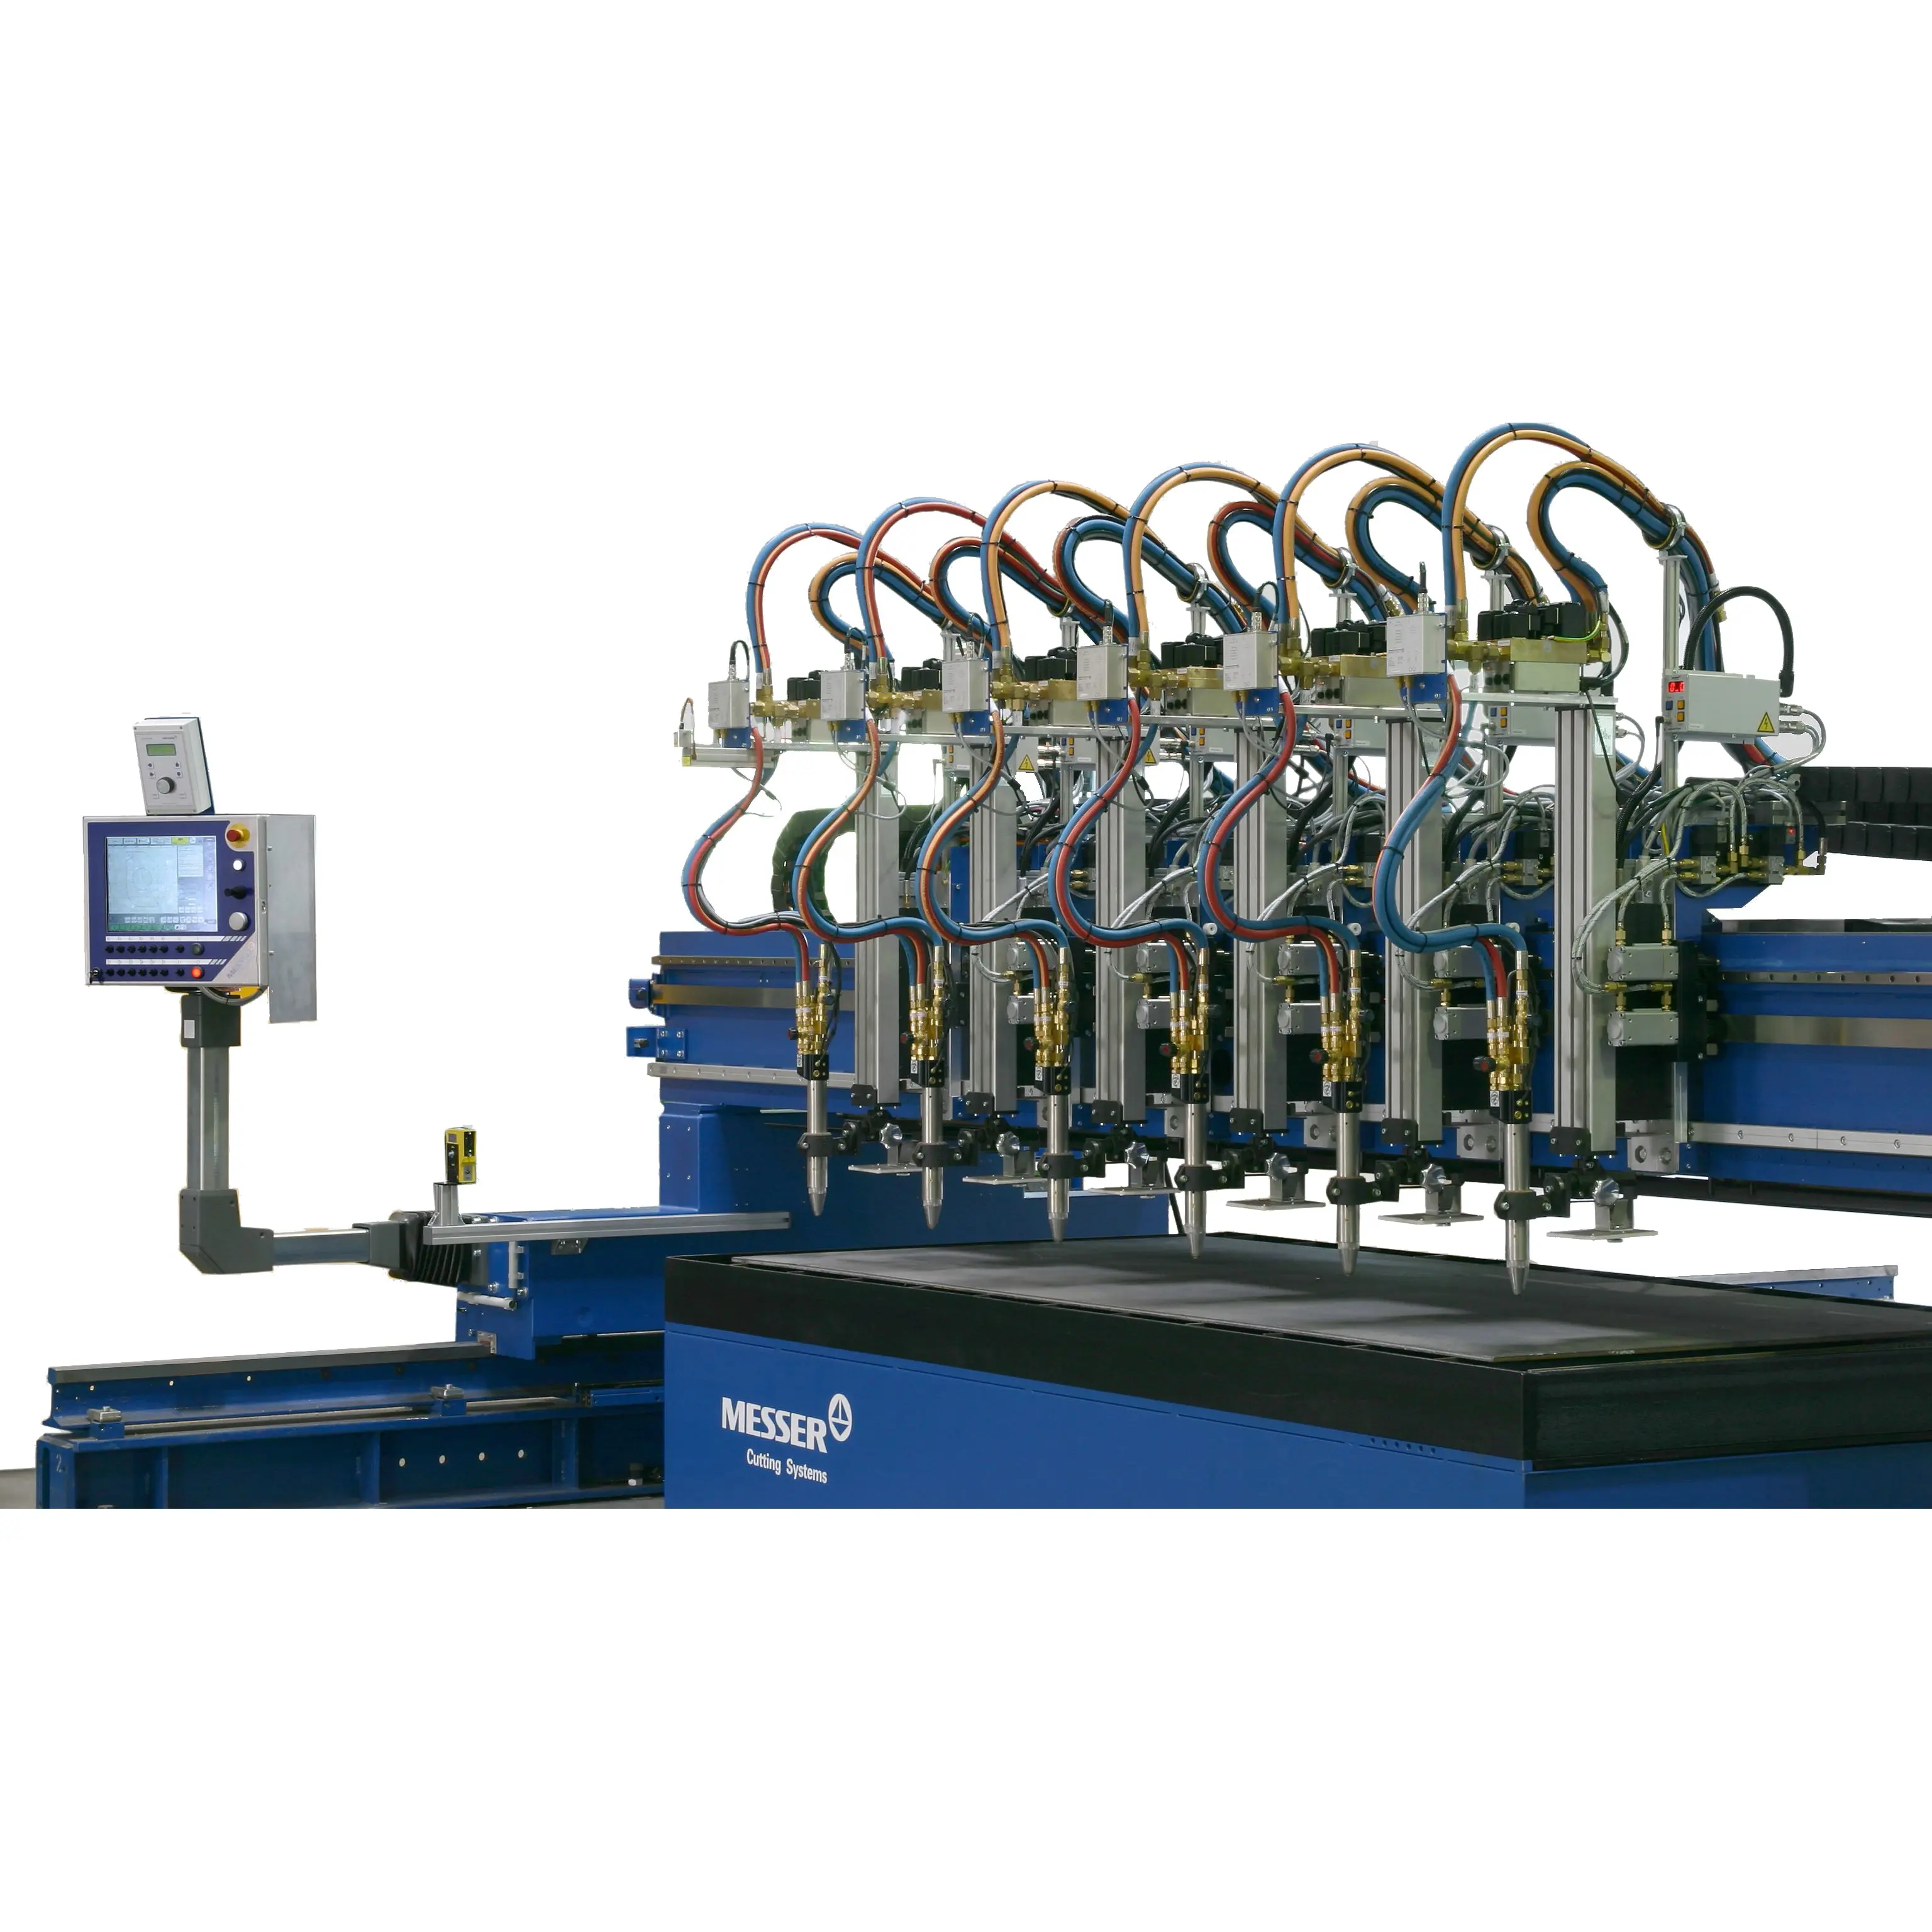 Messer OmniMat T com ALFA Torch Gantry Type Automatic CNC Plasma Gás Cutting Machine